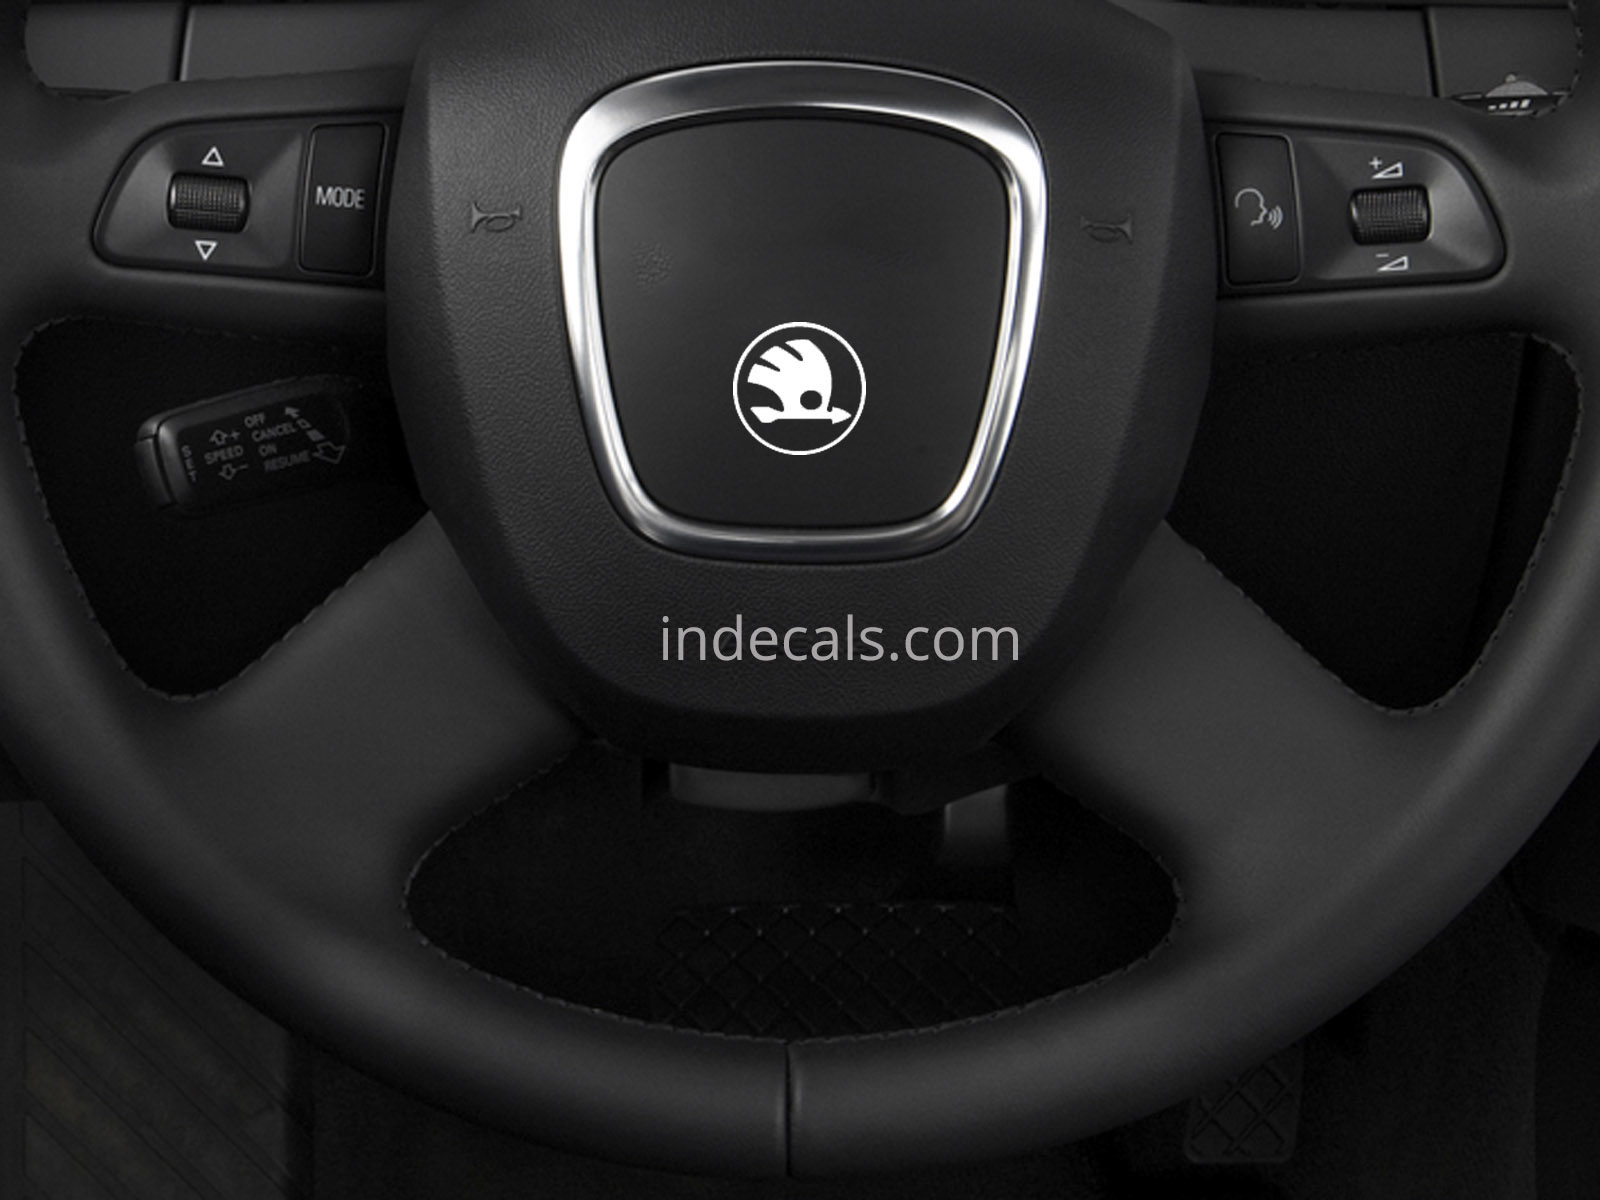 3 x Skoda Stickers for Steering Wheel - White